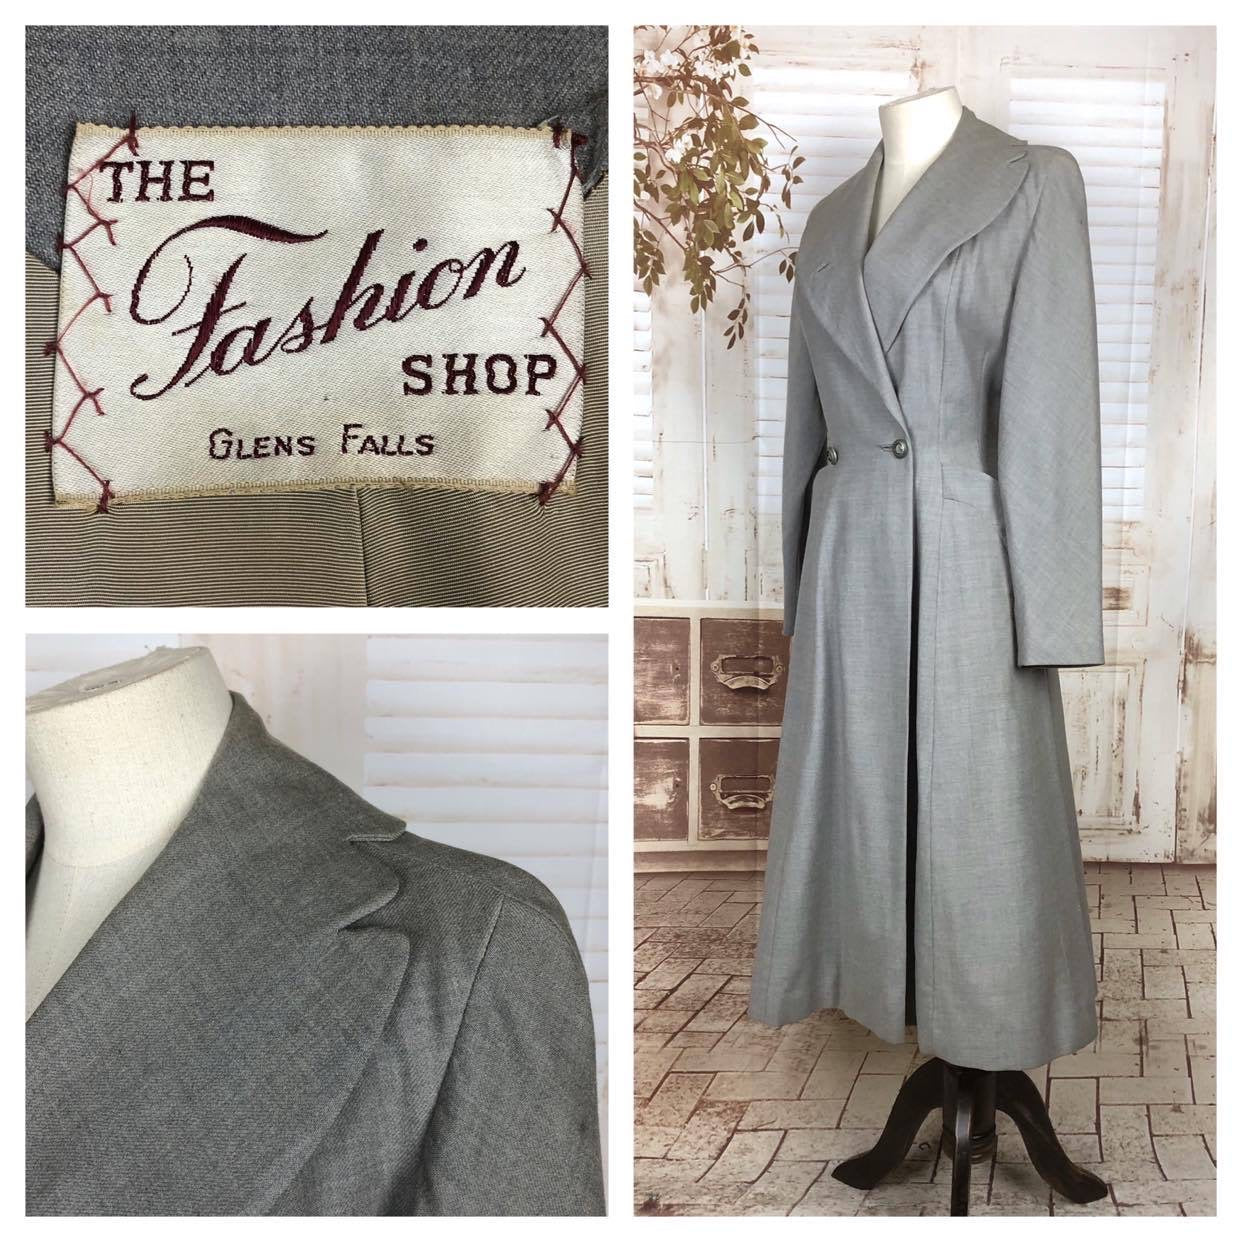 Original 1940s 40s Vintage Lightweight Grey Wool Princess Coat By Eldorado